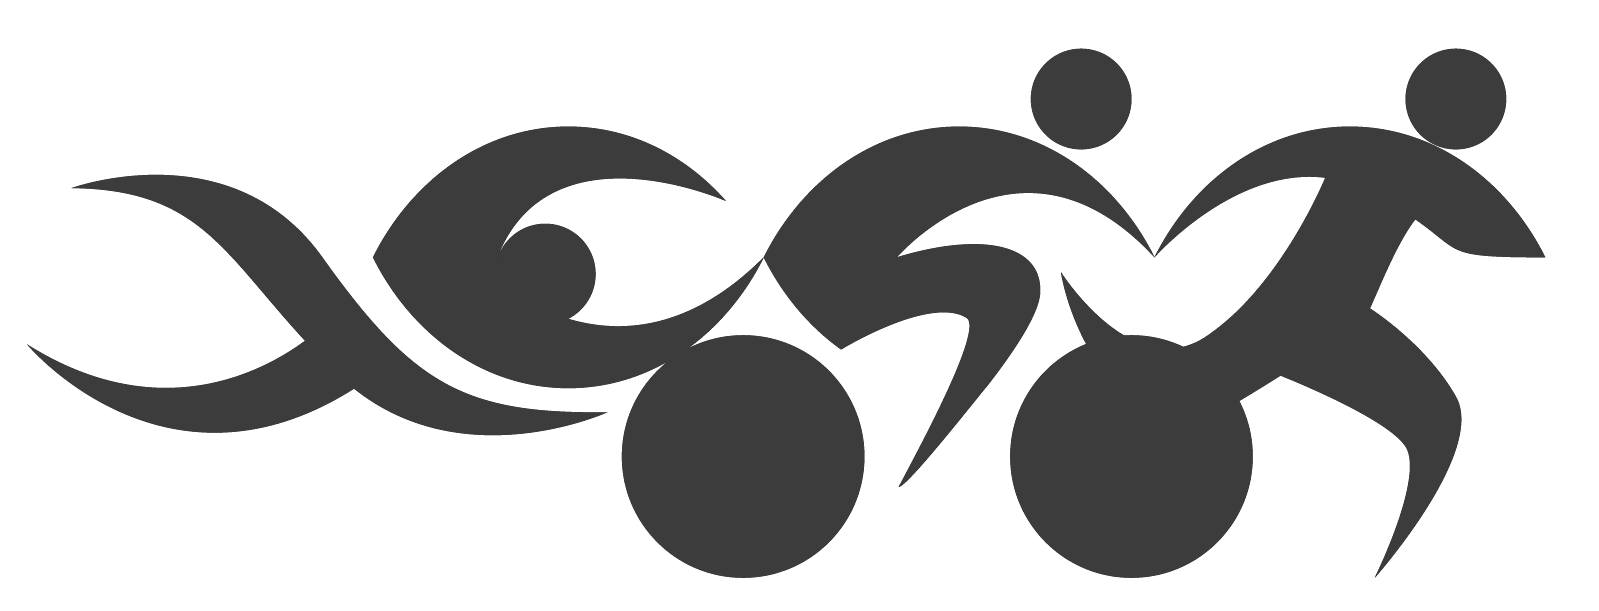 Olympic clipart triathlon bike. Usa distance national championships